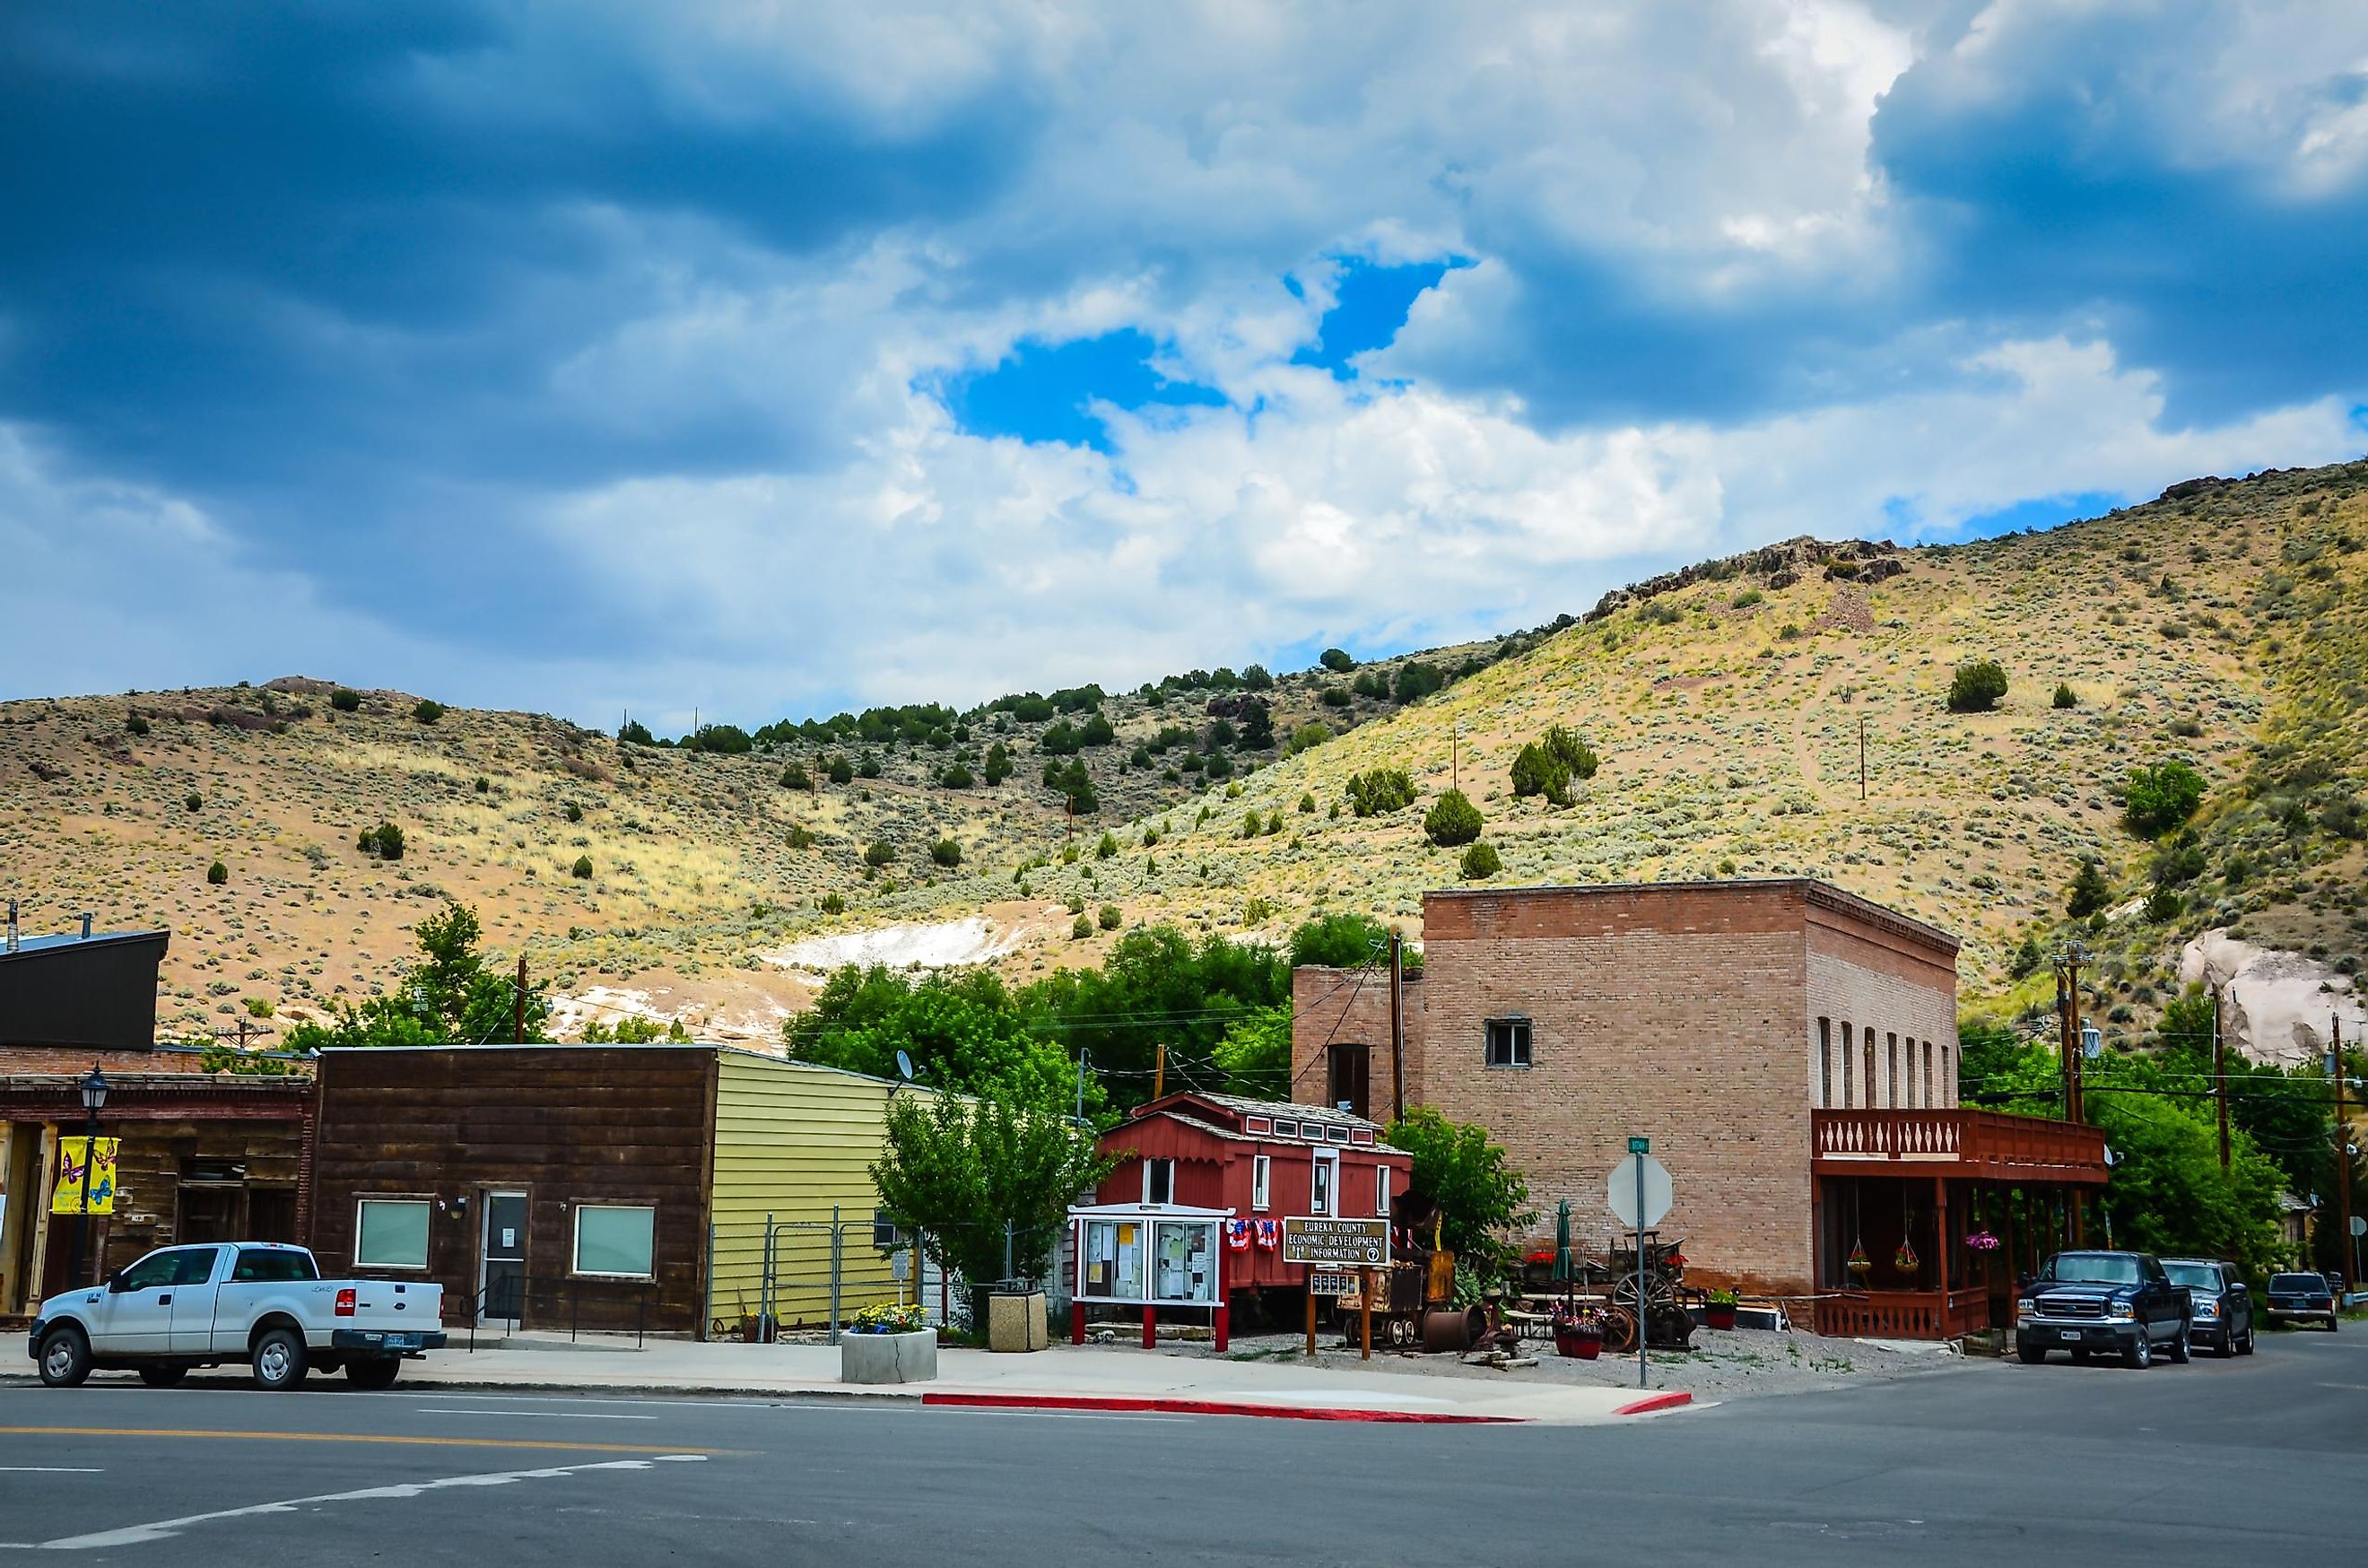 The town of Eureka, Nevada. Image credit Sandra Foyt via Shutterstock